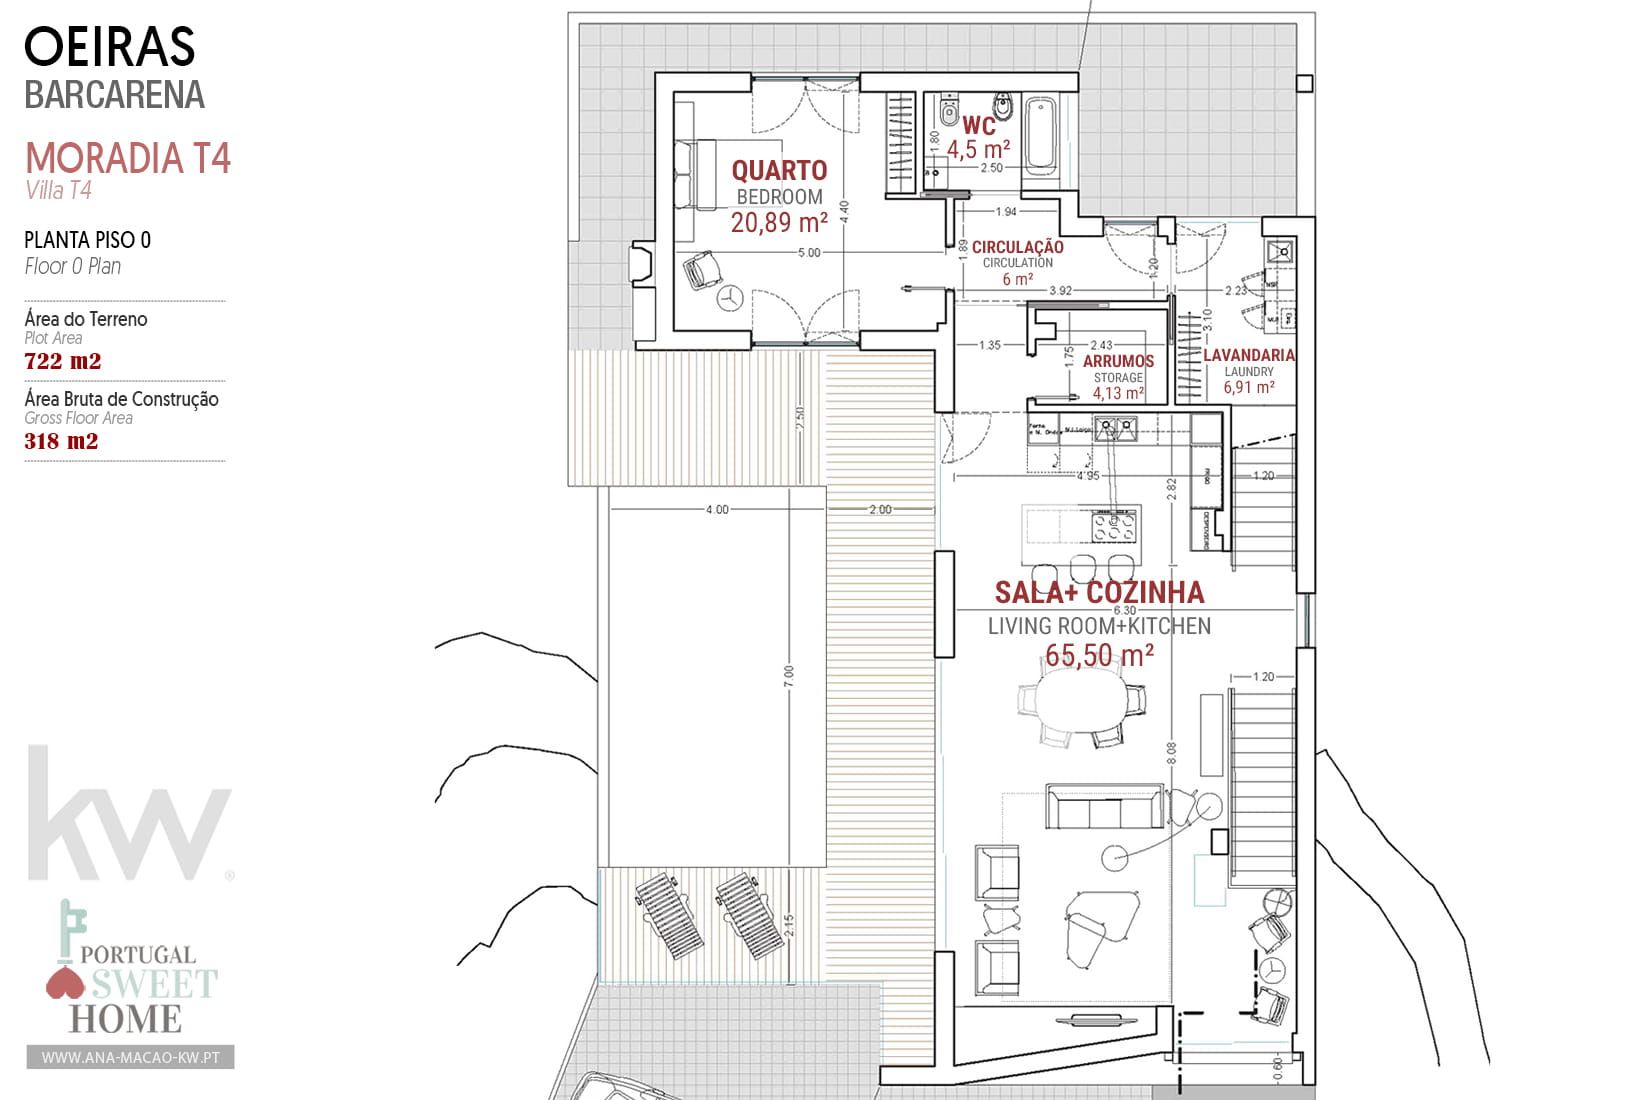 Floor Plan 1 - Social Area